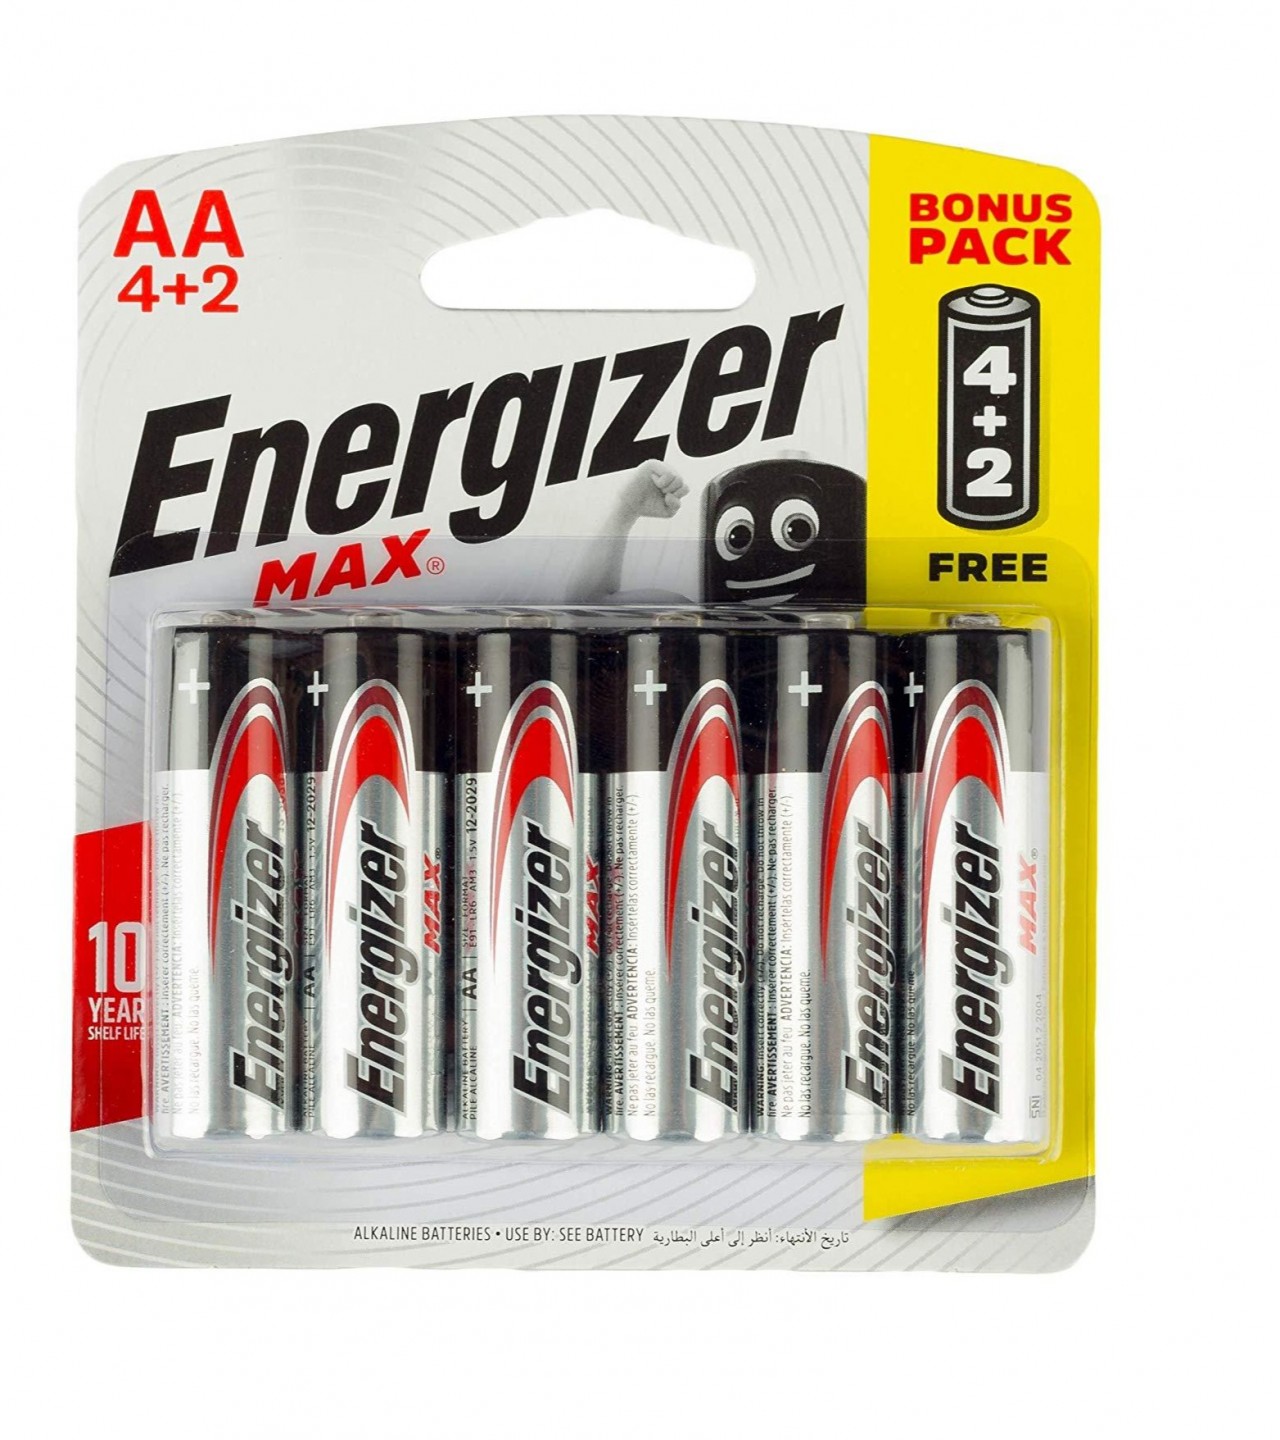 100% Original Energizer MAX AA Batteries, 4+2 Bonus Pack Alkaline Battery Cells